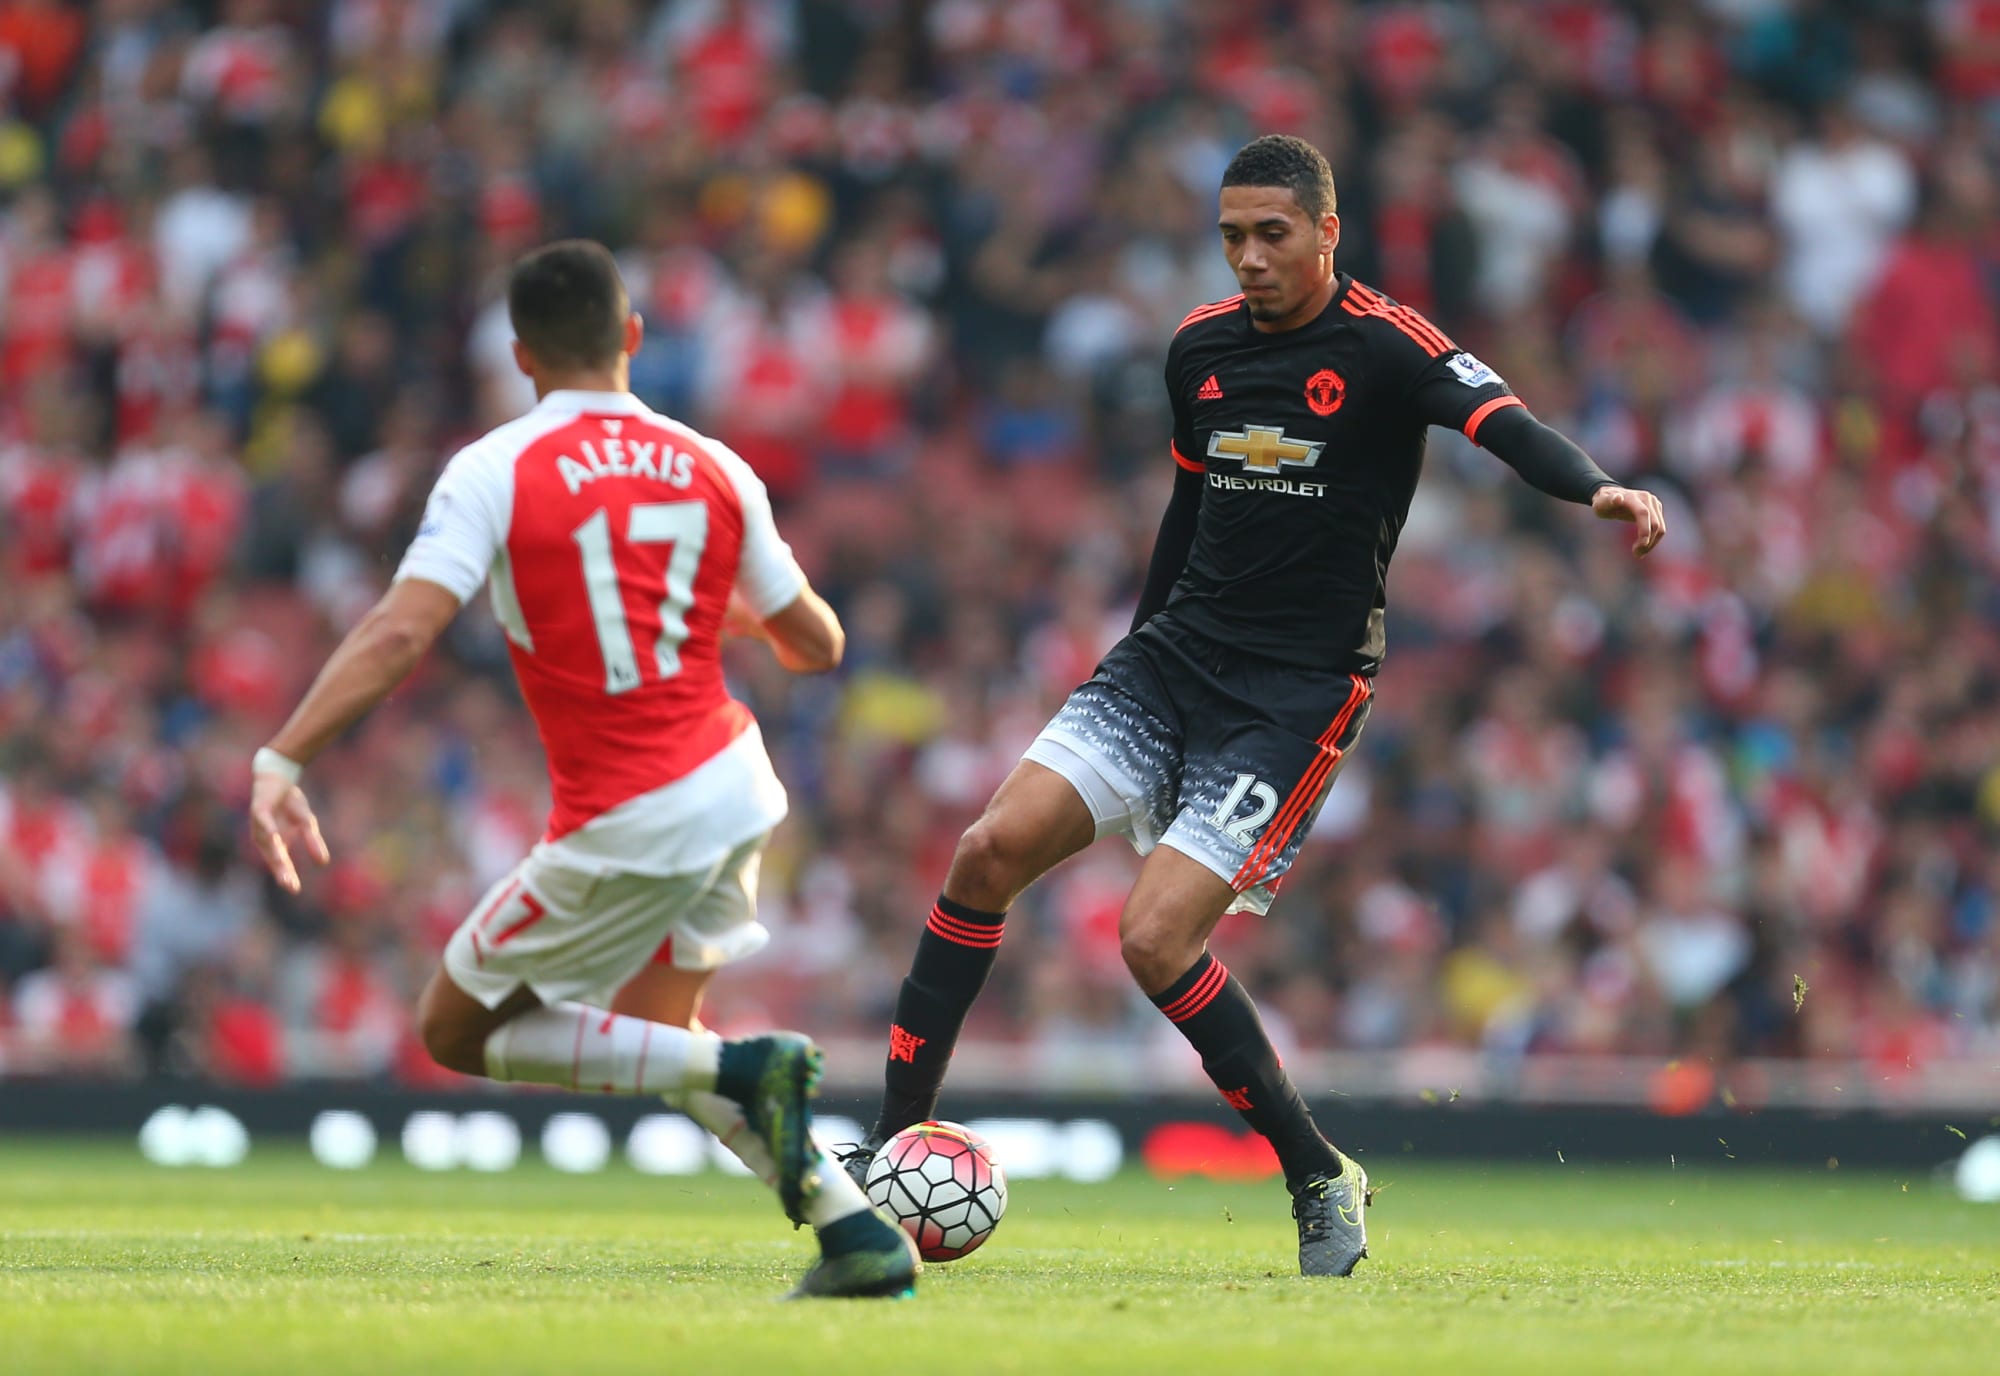 Manchester United vs. Arsenal: Key Battles on the Pitch